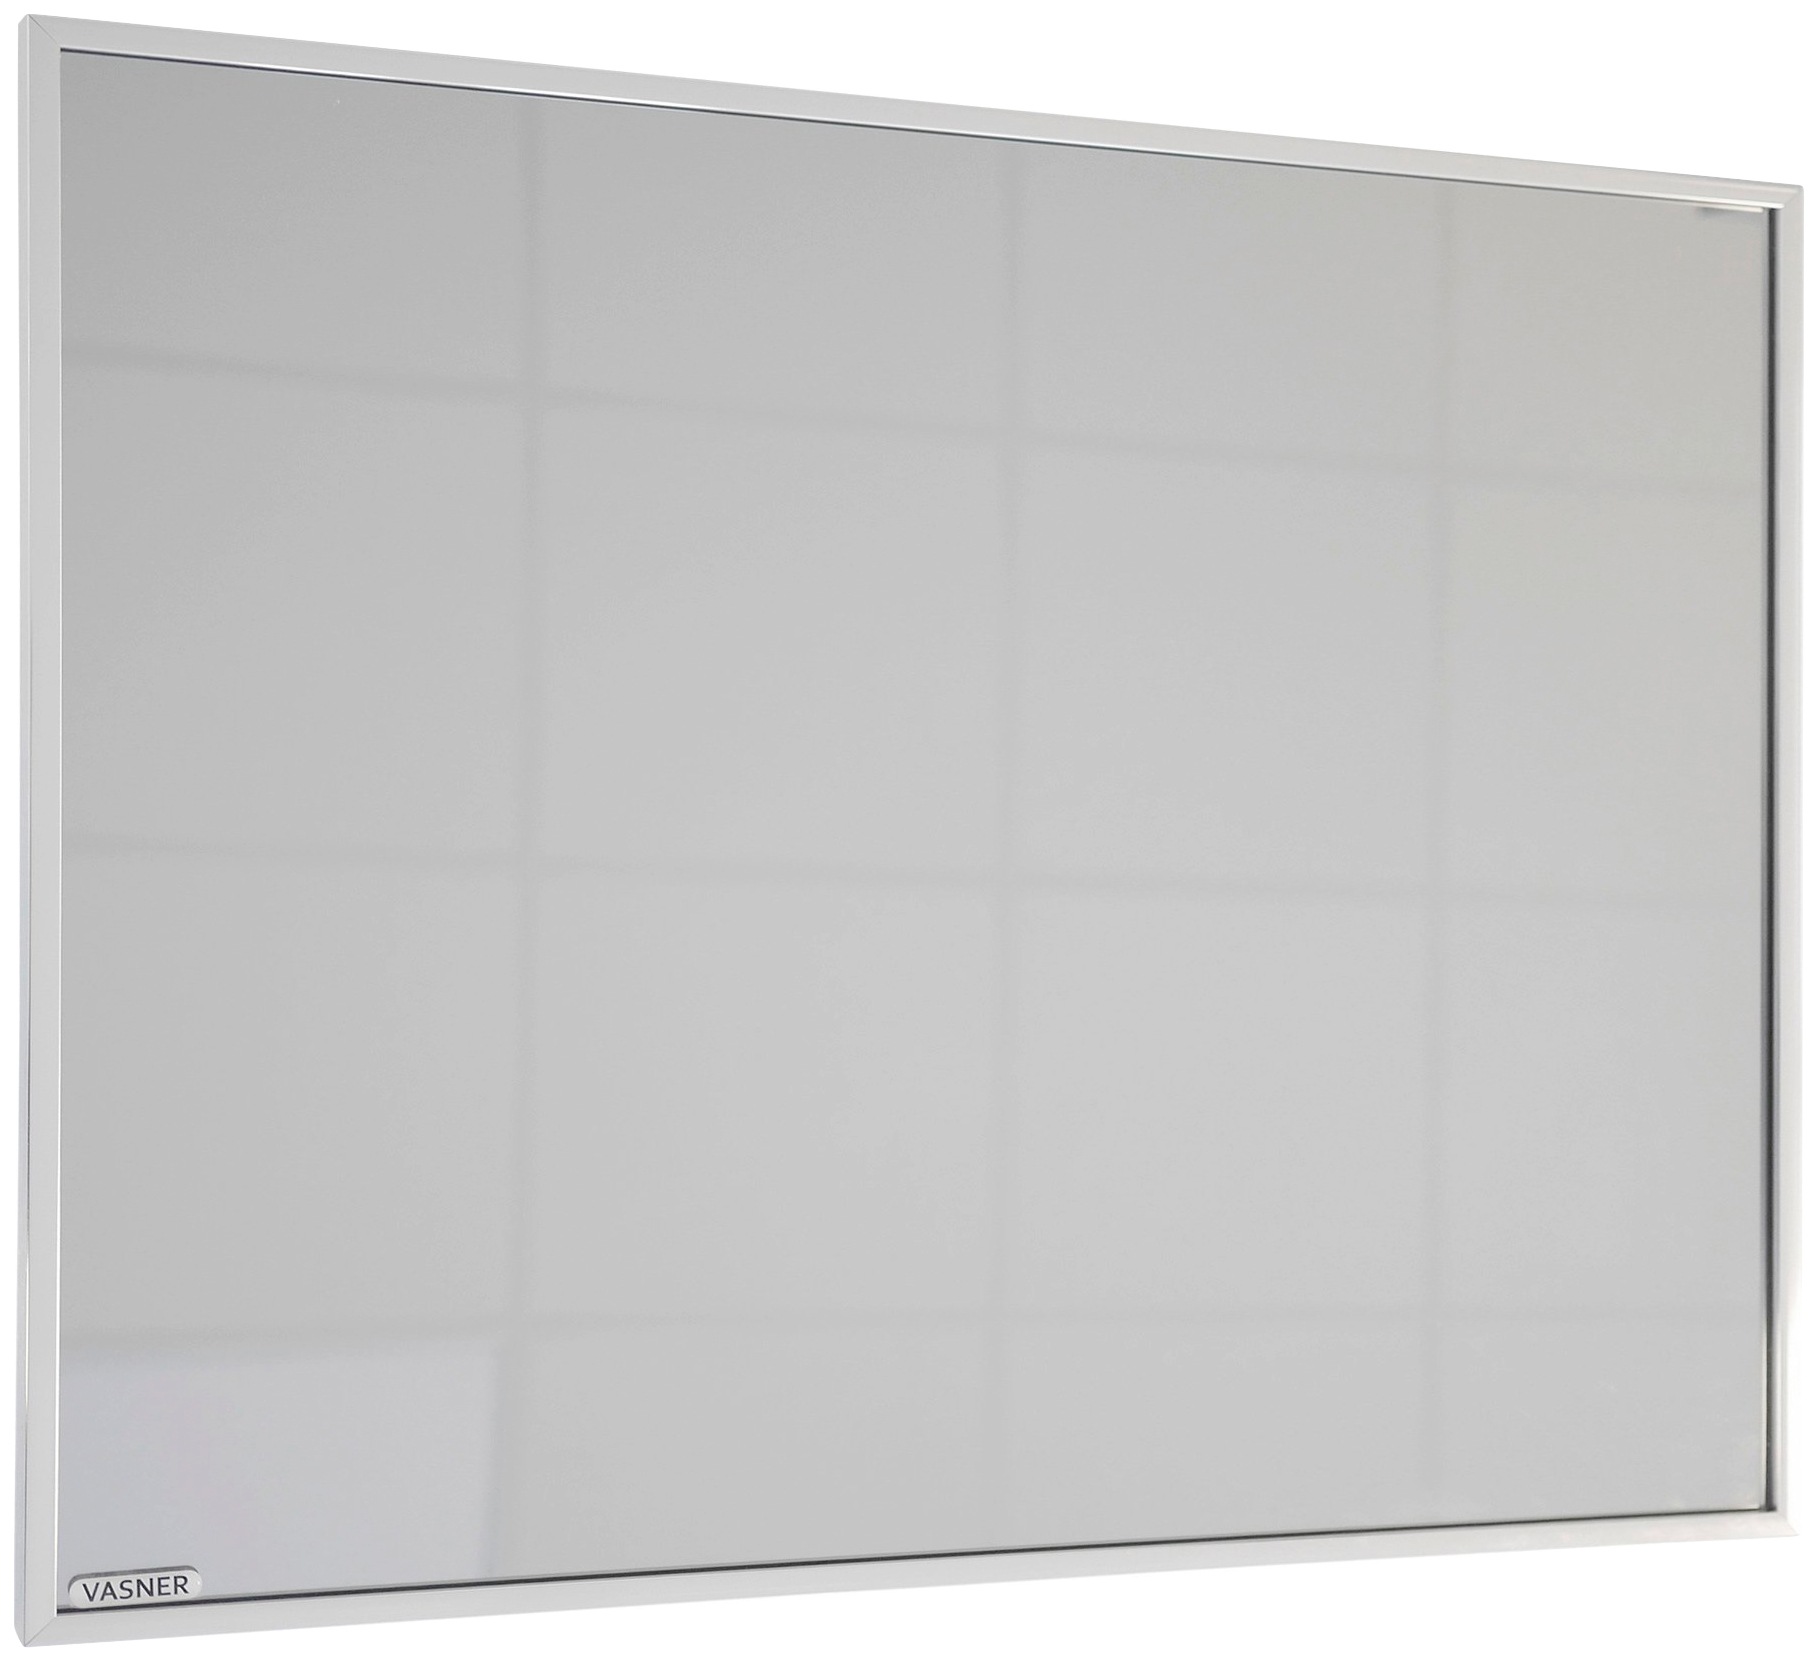 Vasner Infrarotheizung "Zipris S", Glas/Chrom, 600 W, 110x60 cm